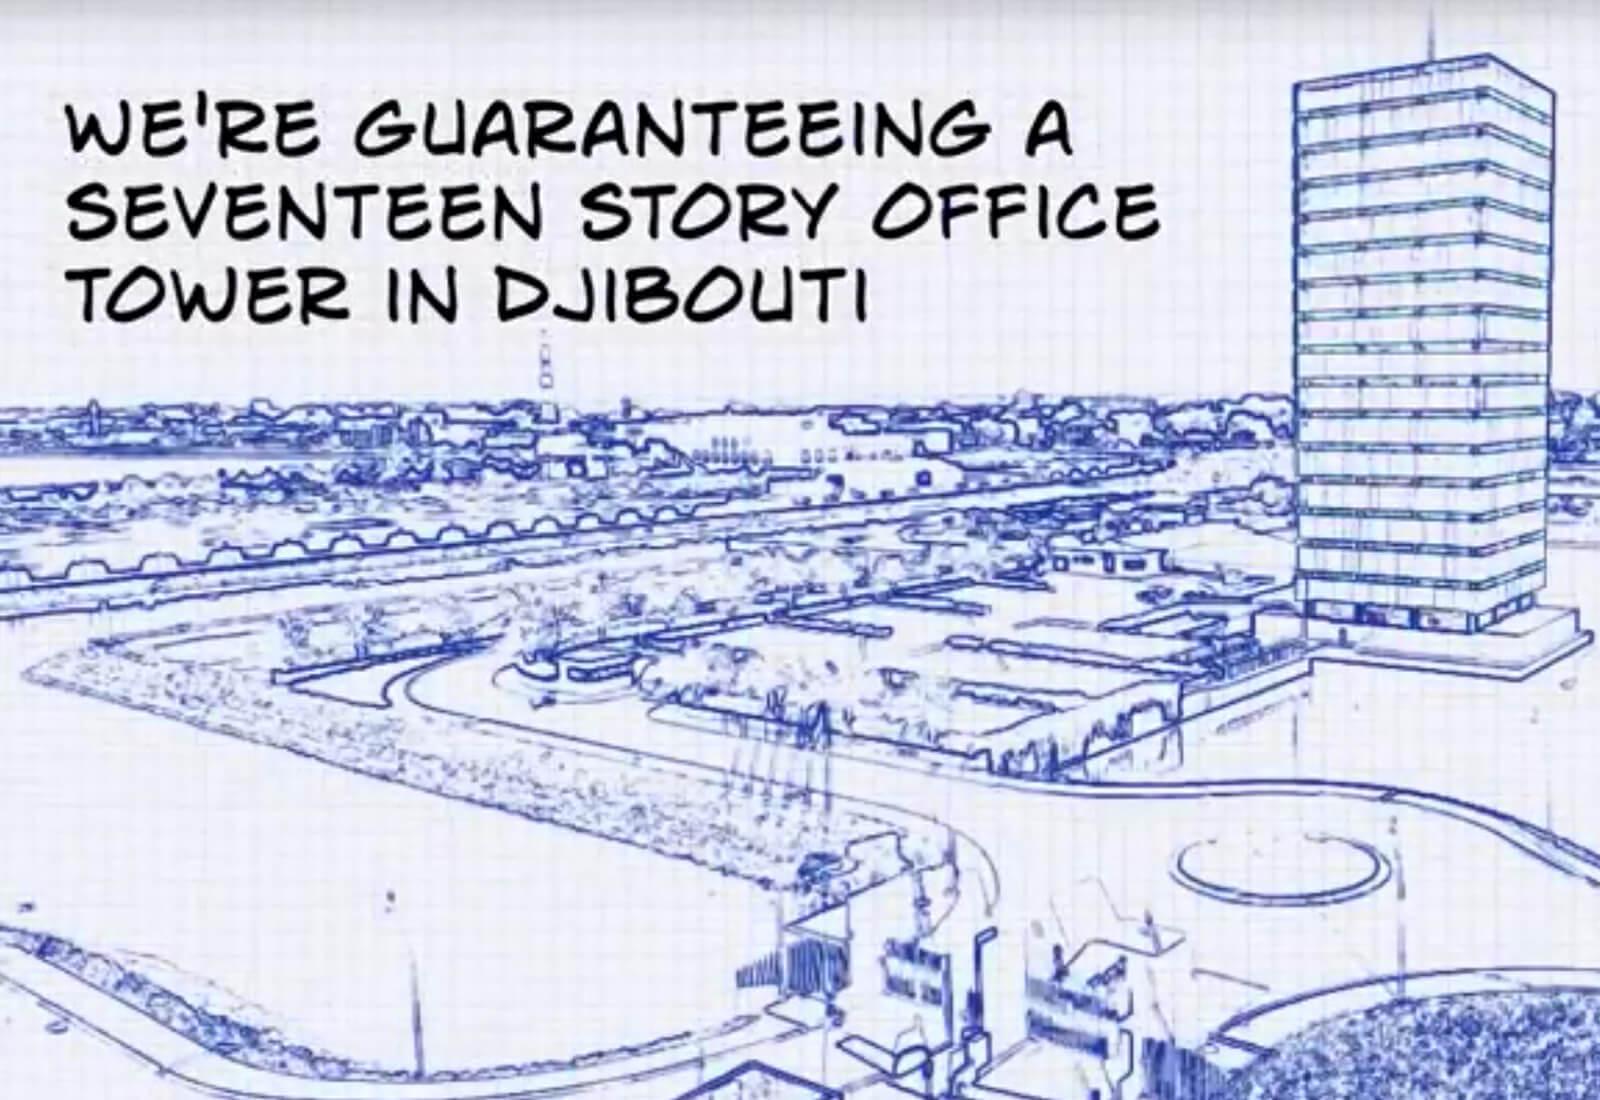 Djibouti office video